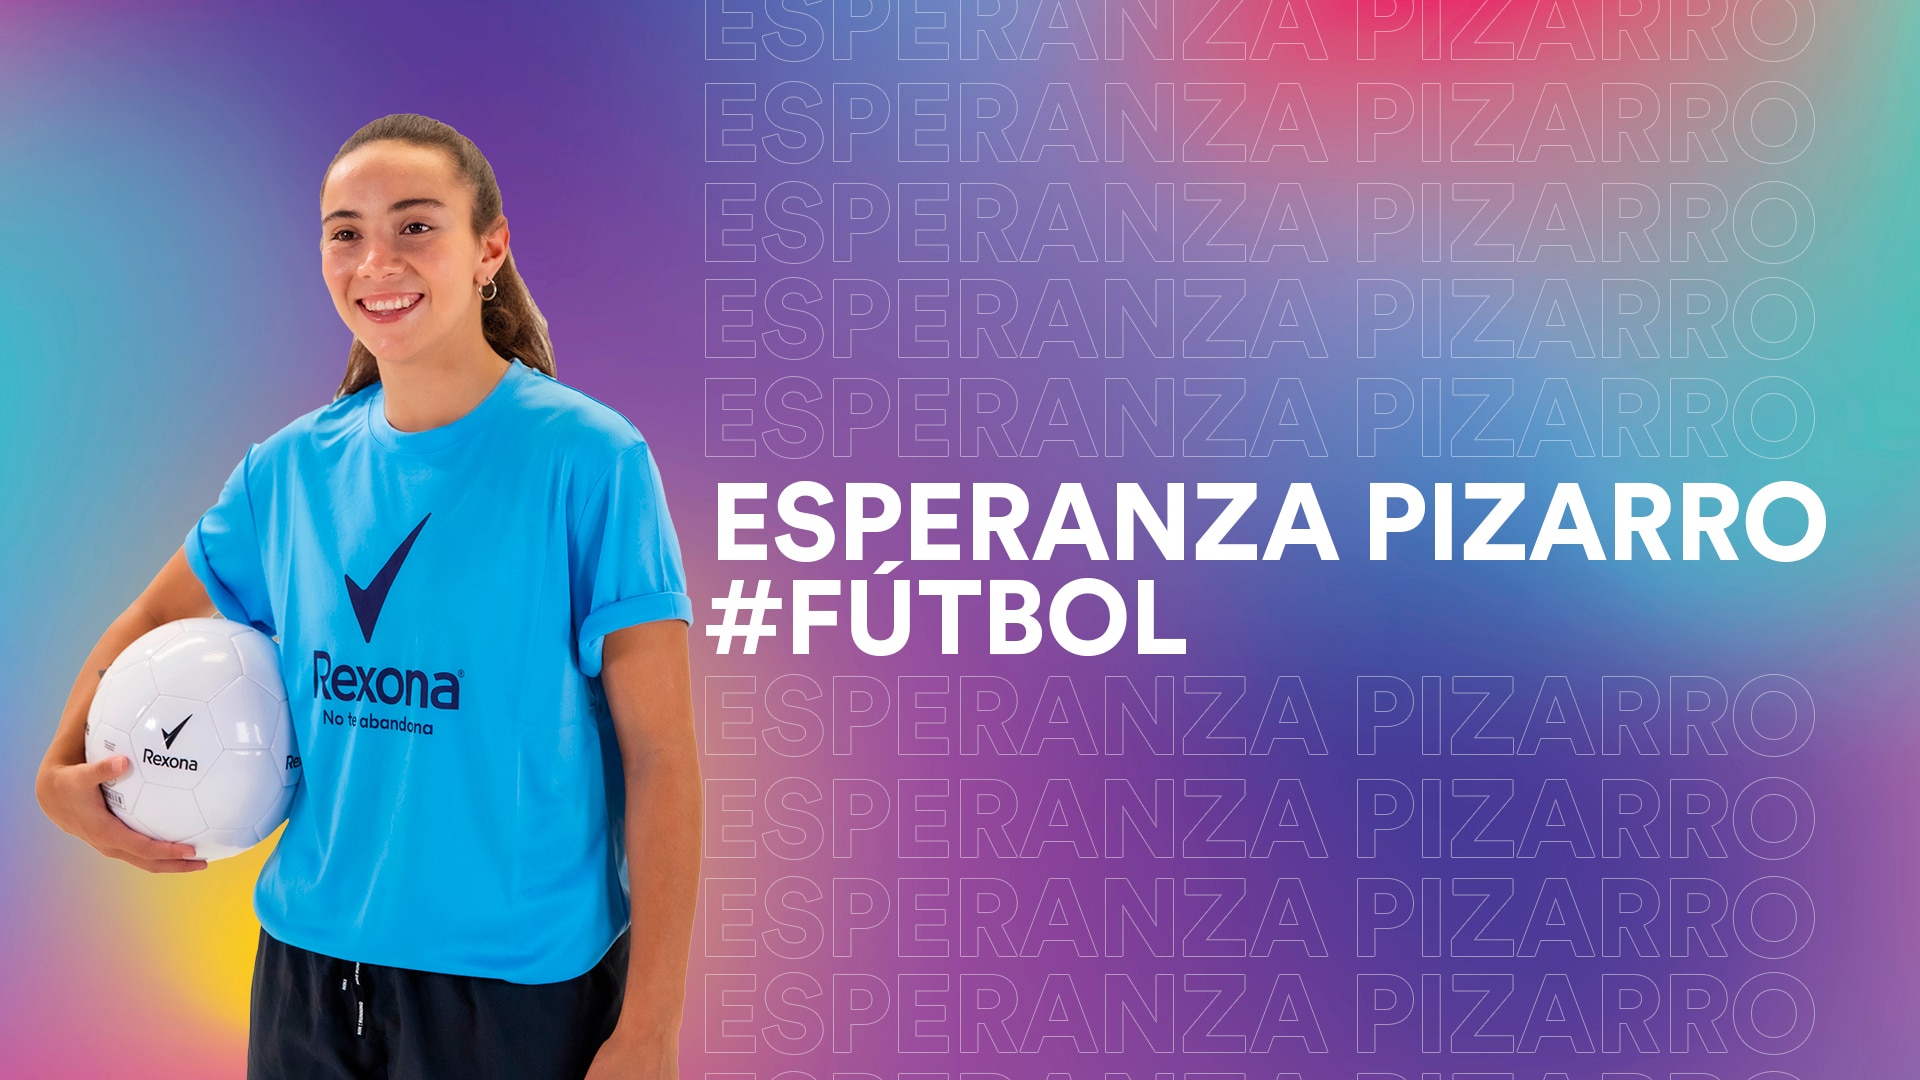 Futbol – Esperanza Pizarro